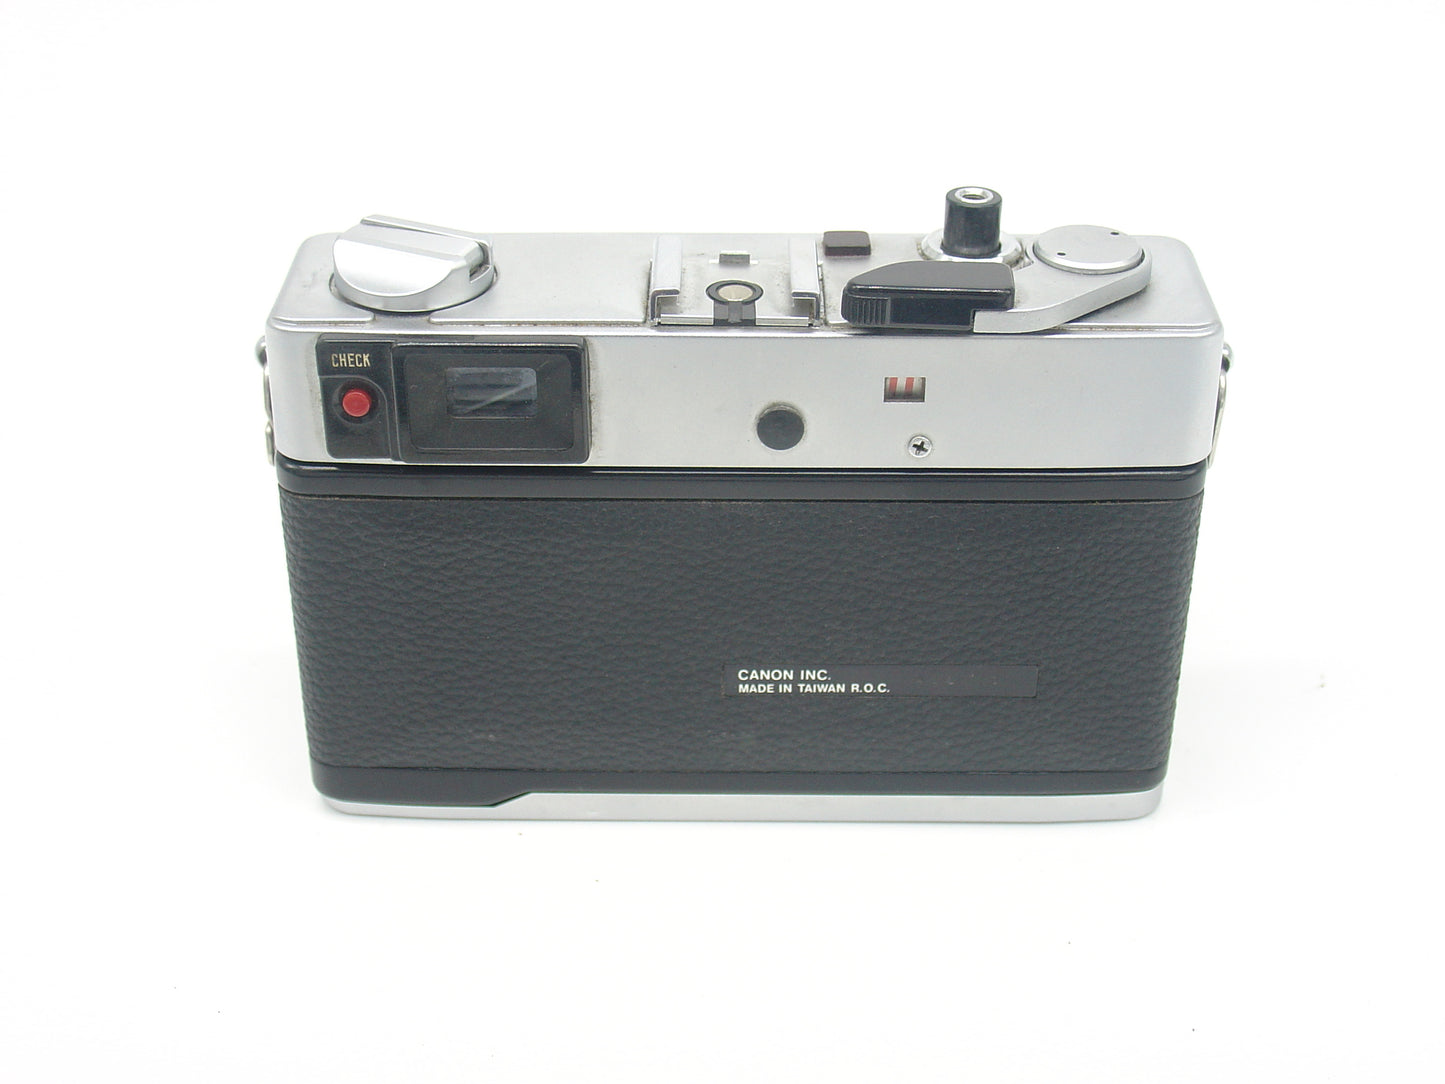 Canon Datematic Rangefinder camera